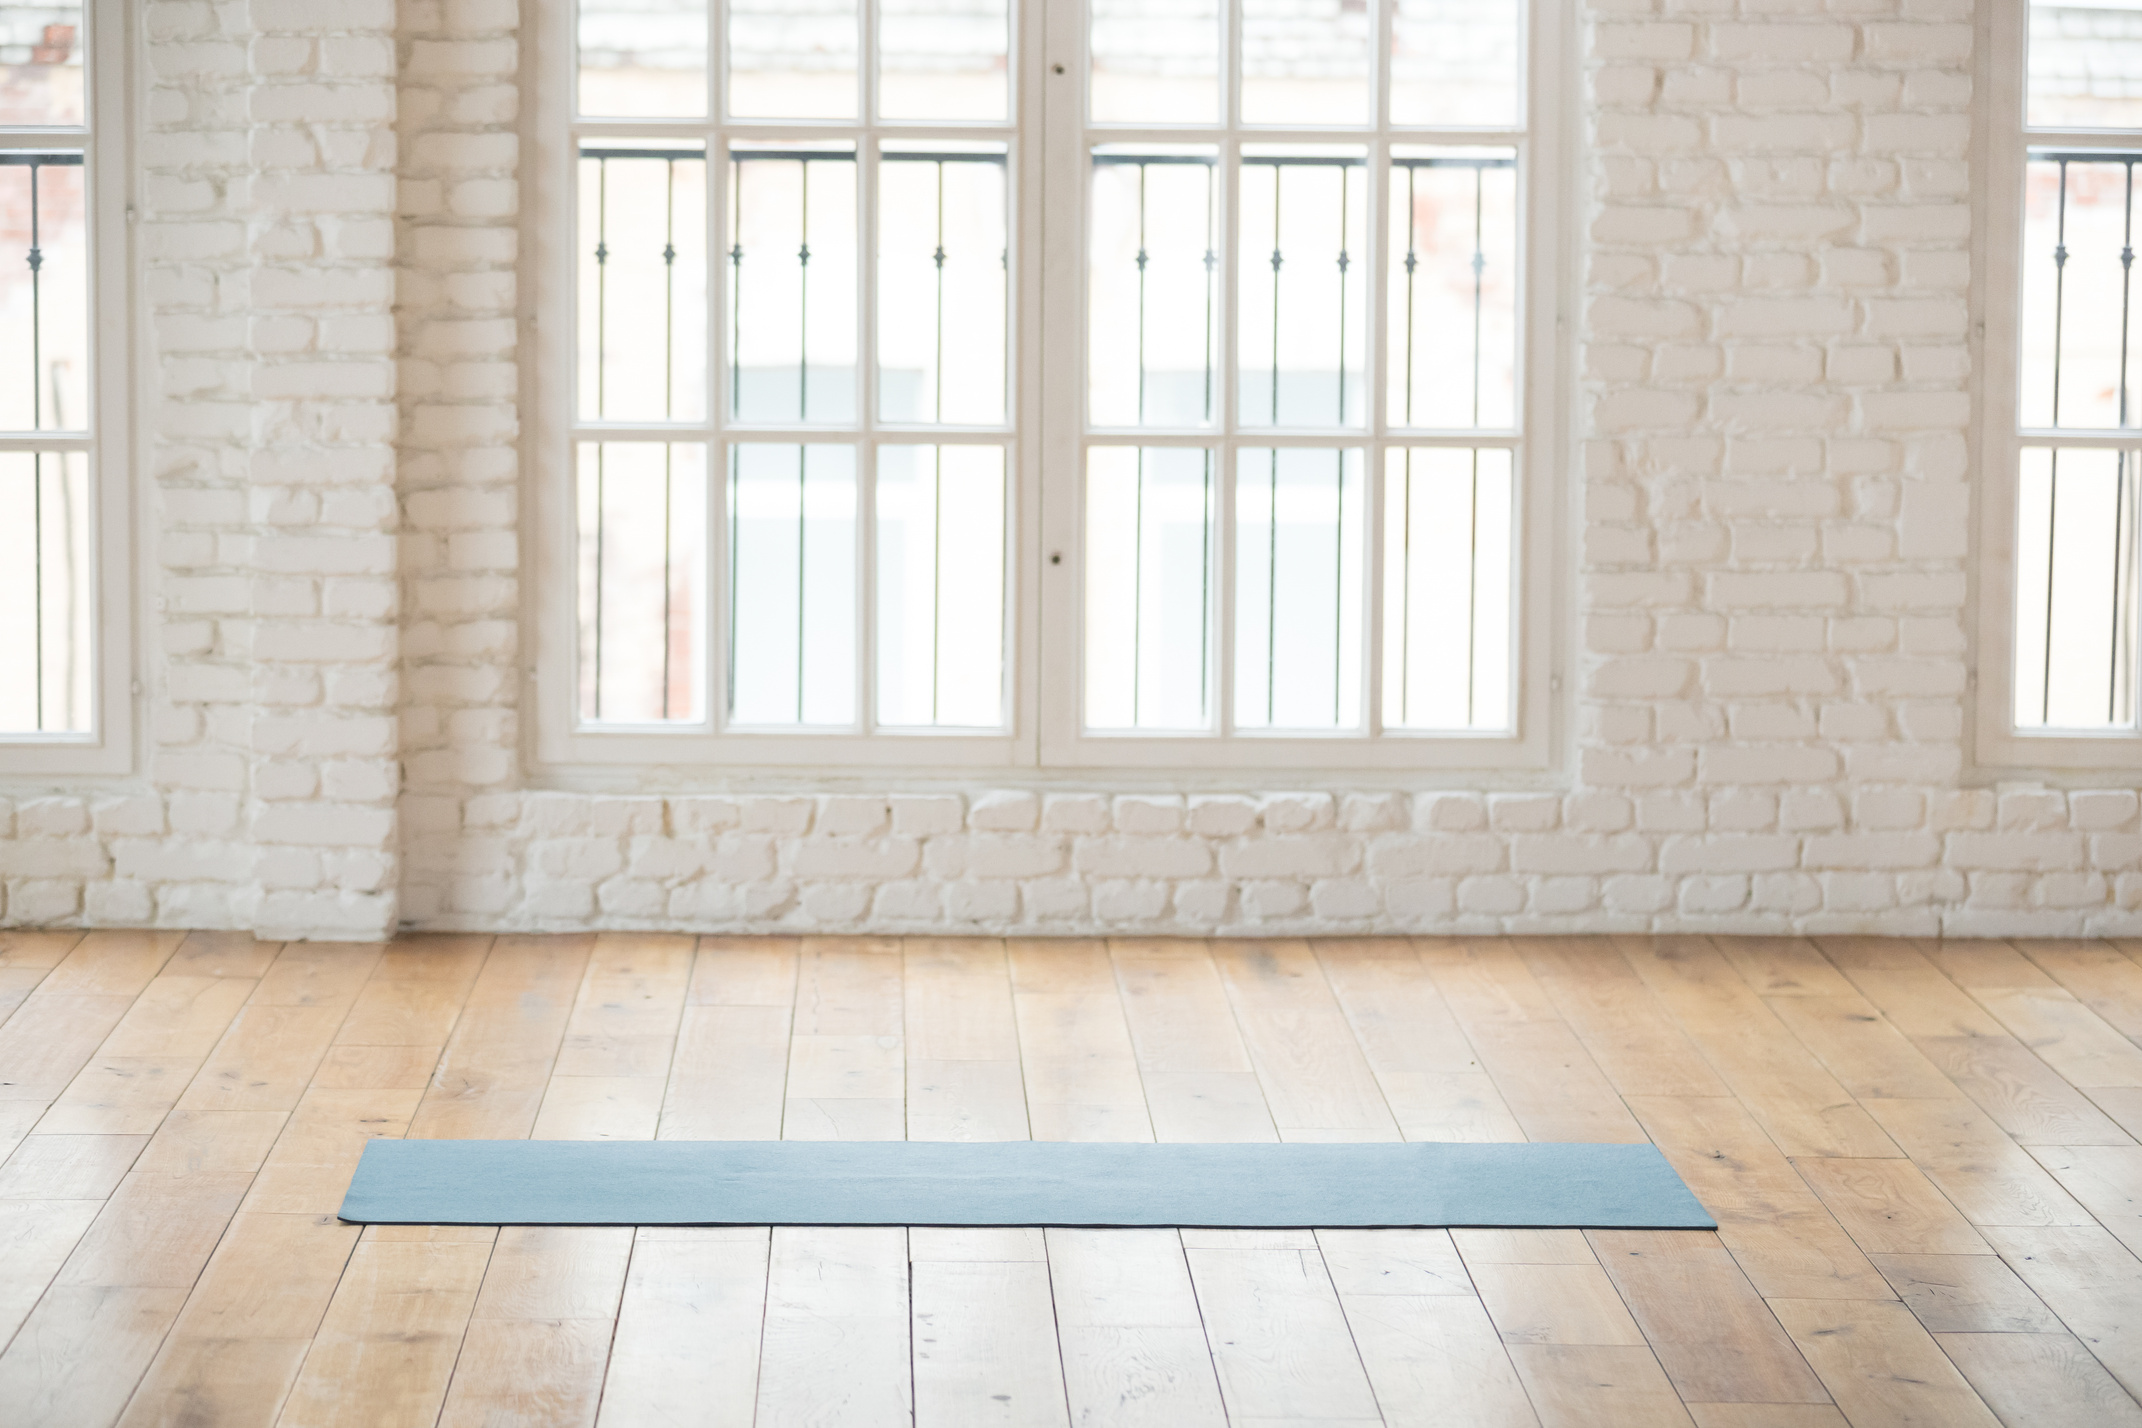 Unrolled yoga mat in empty fitness studio